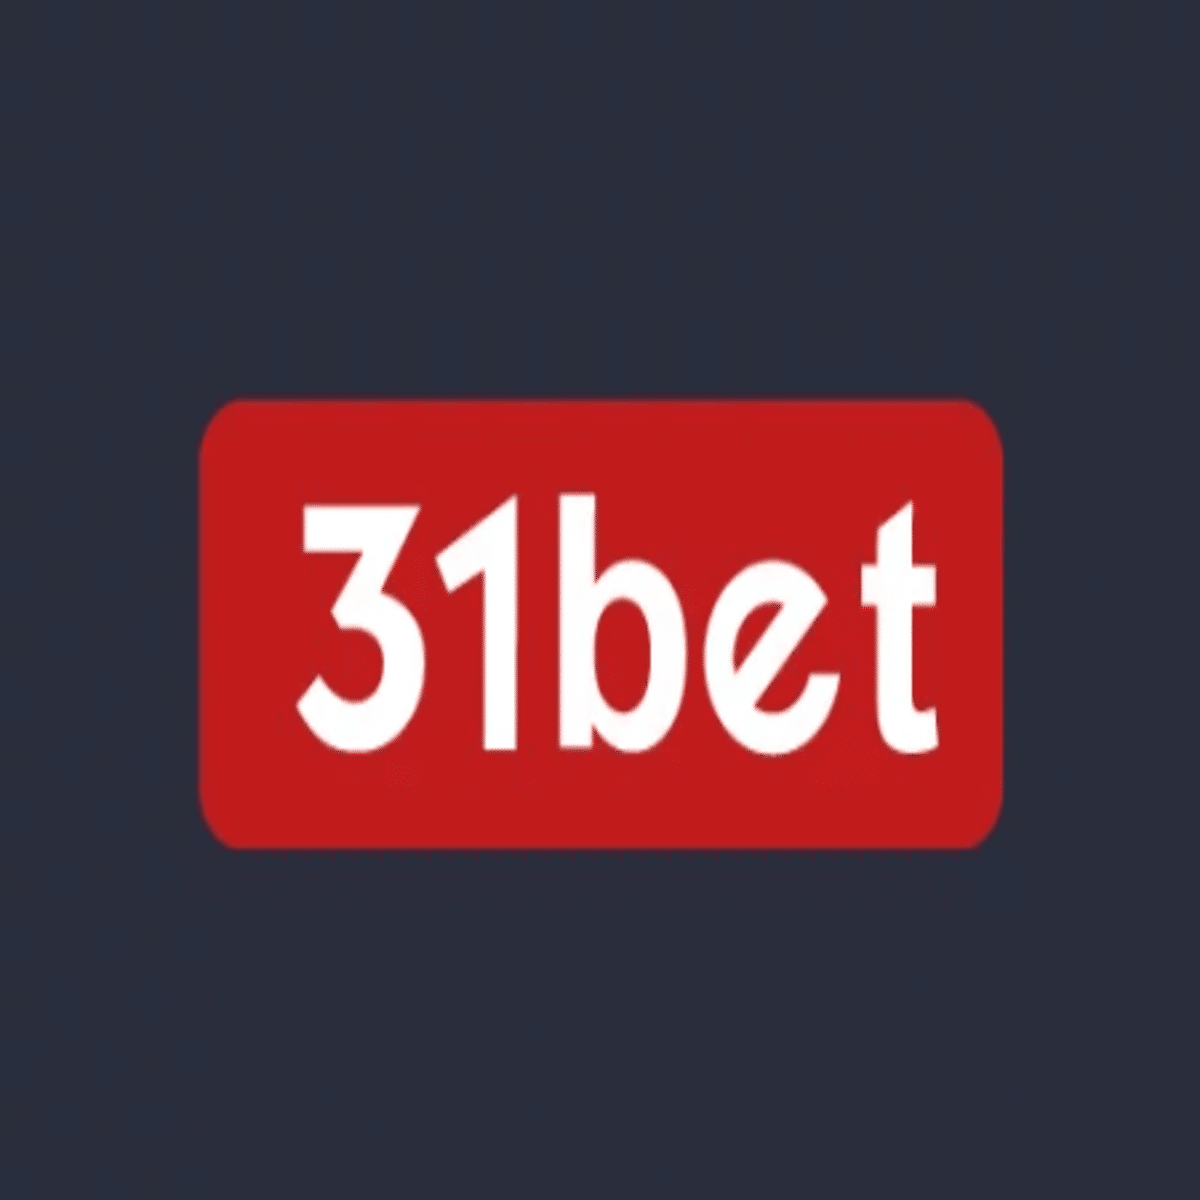 31bet Casino Logo